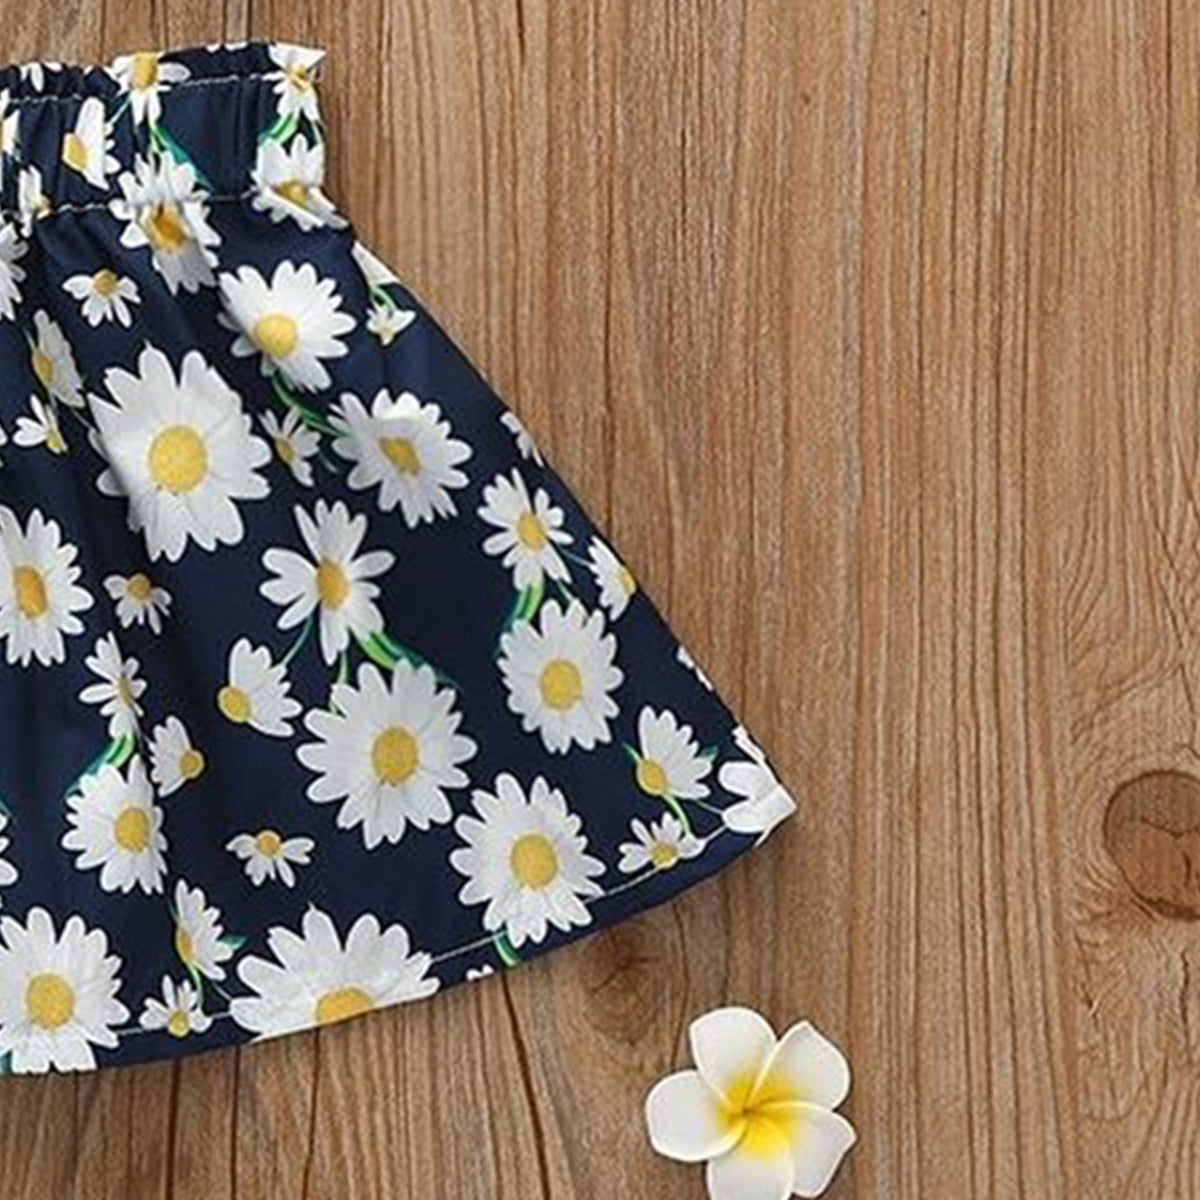 Venutaloza Toddler Girls Floral Print Elastic Waist Skirt.,